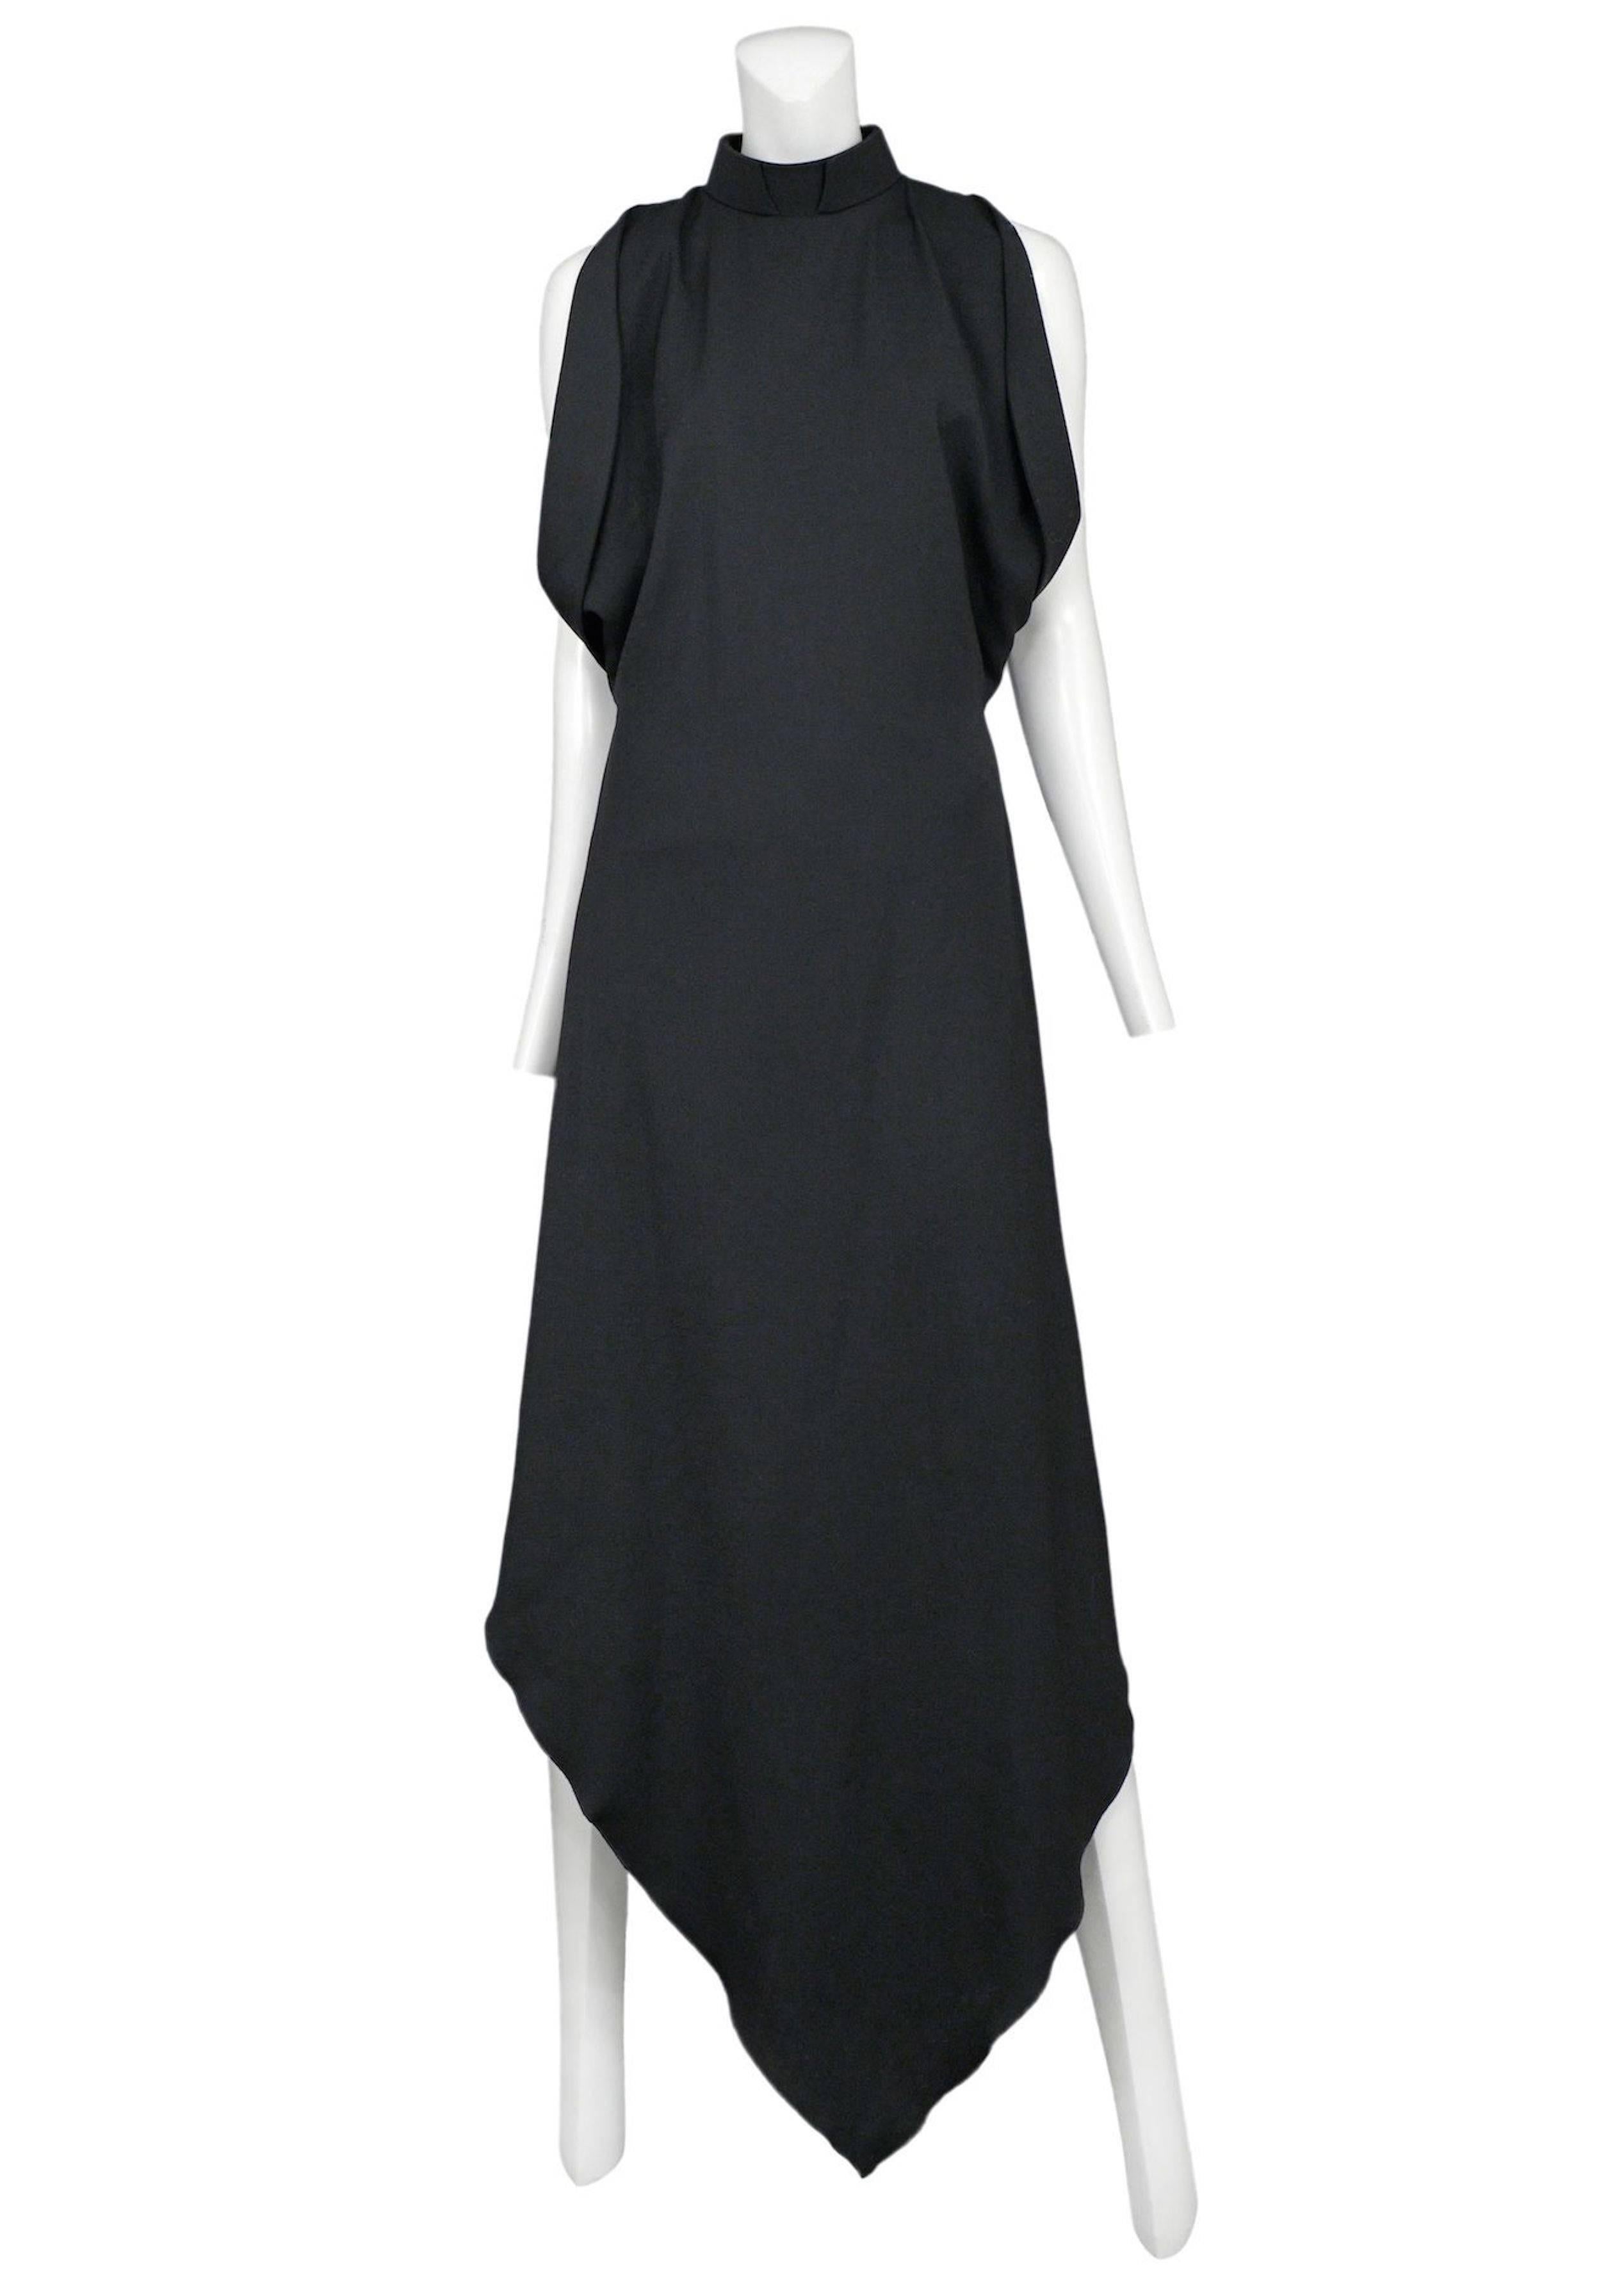 Vintage Maison Martin Margiela black long priestess gown featuring draped arm holes and a stiff priest like collar. Circa Autumn / Winter 2008.